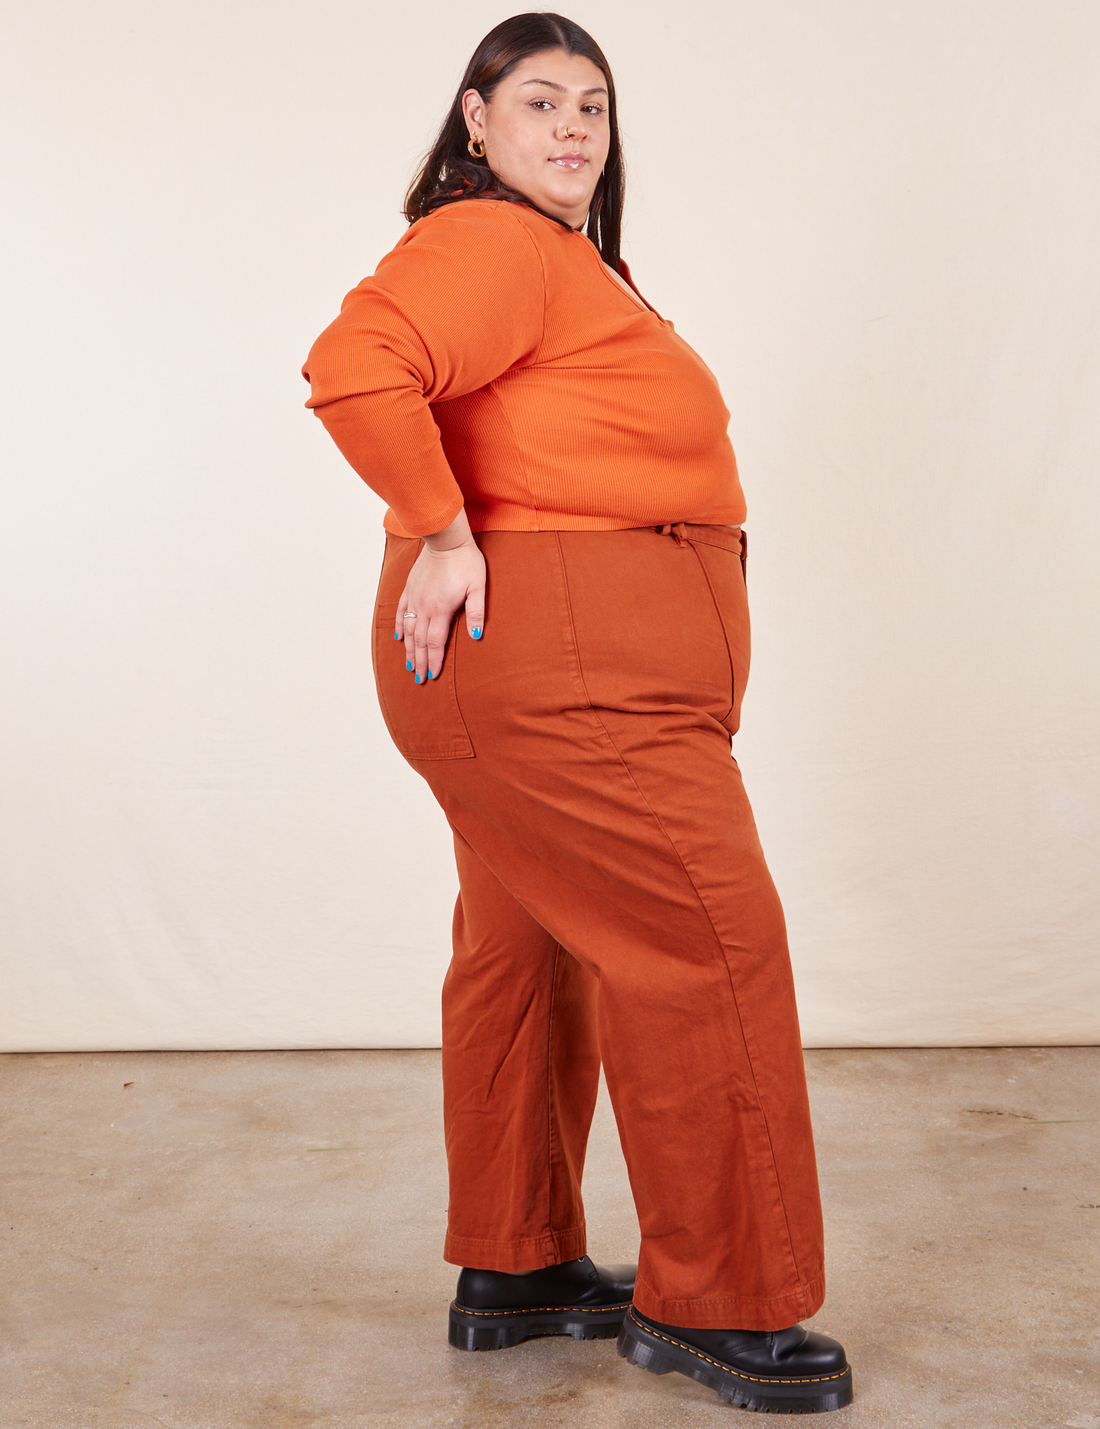 Western Pants in Burnt Terracotta side view on Sarita wearing burnt orange Long Sleeve V-Neck